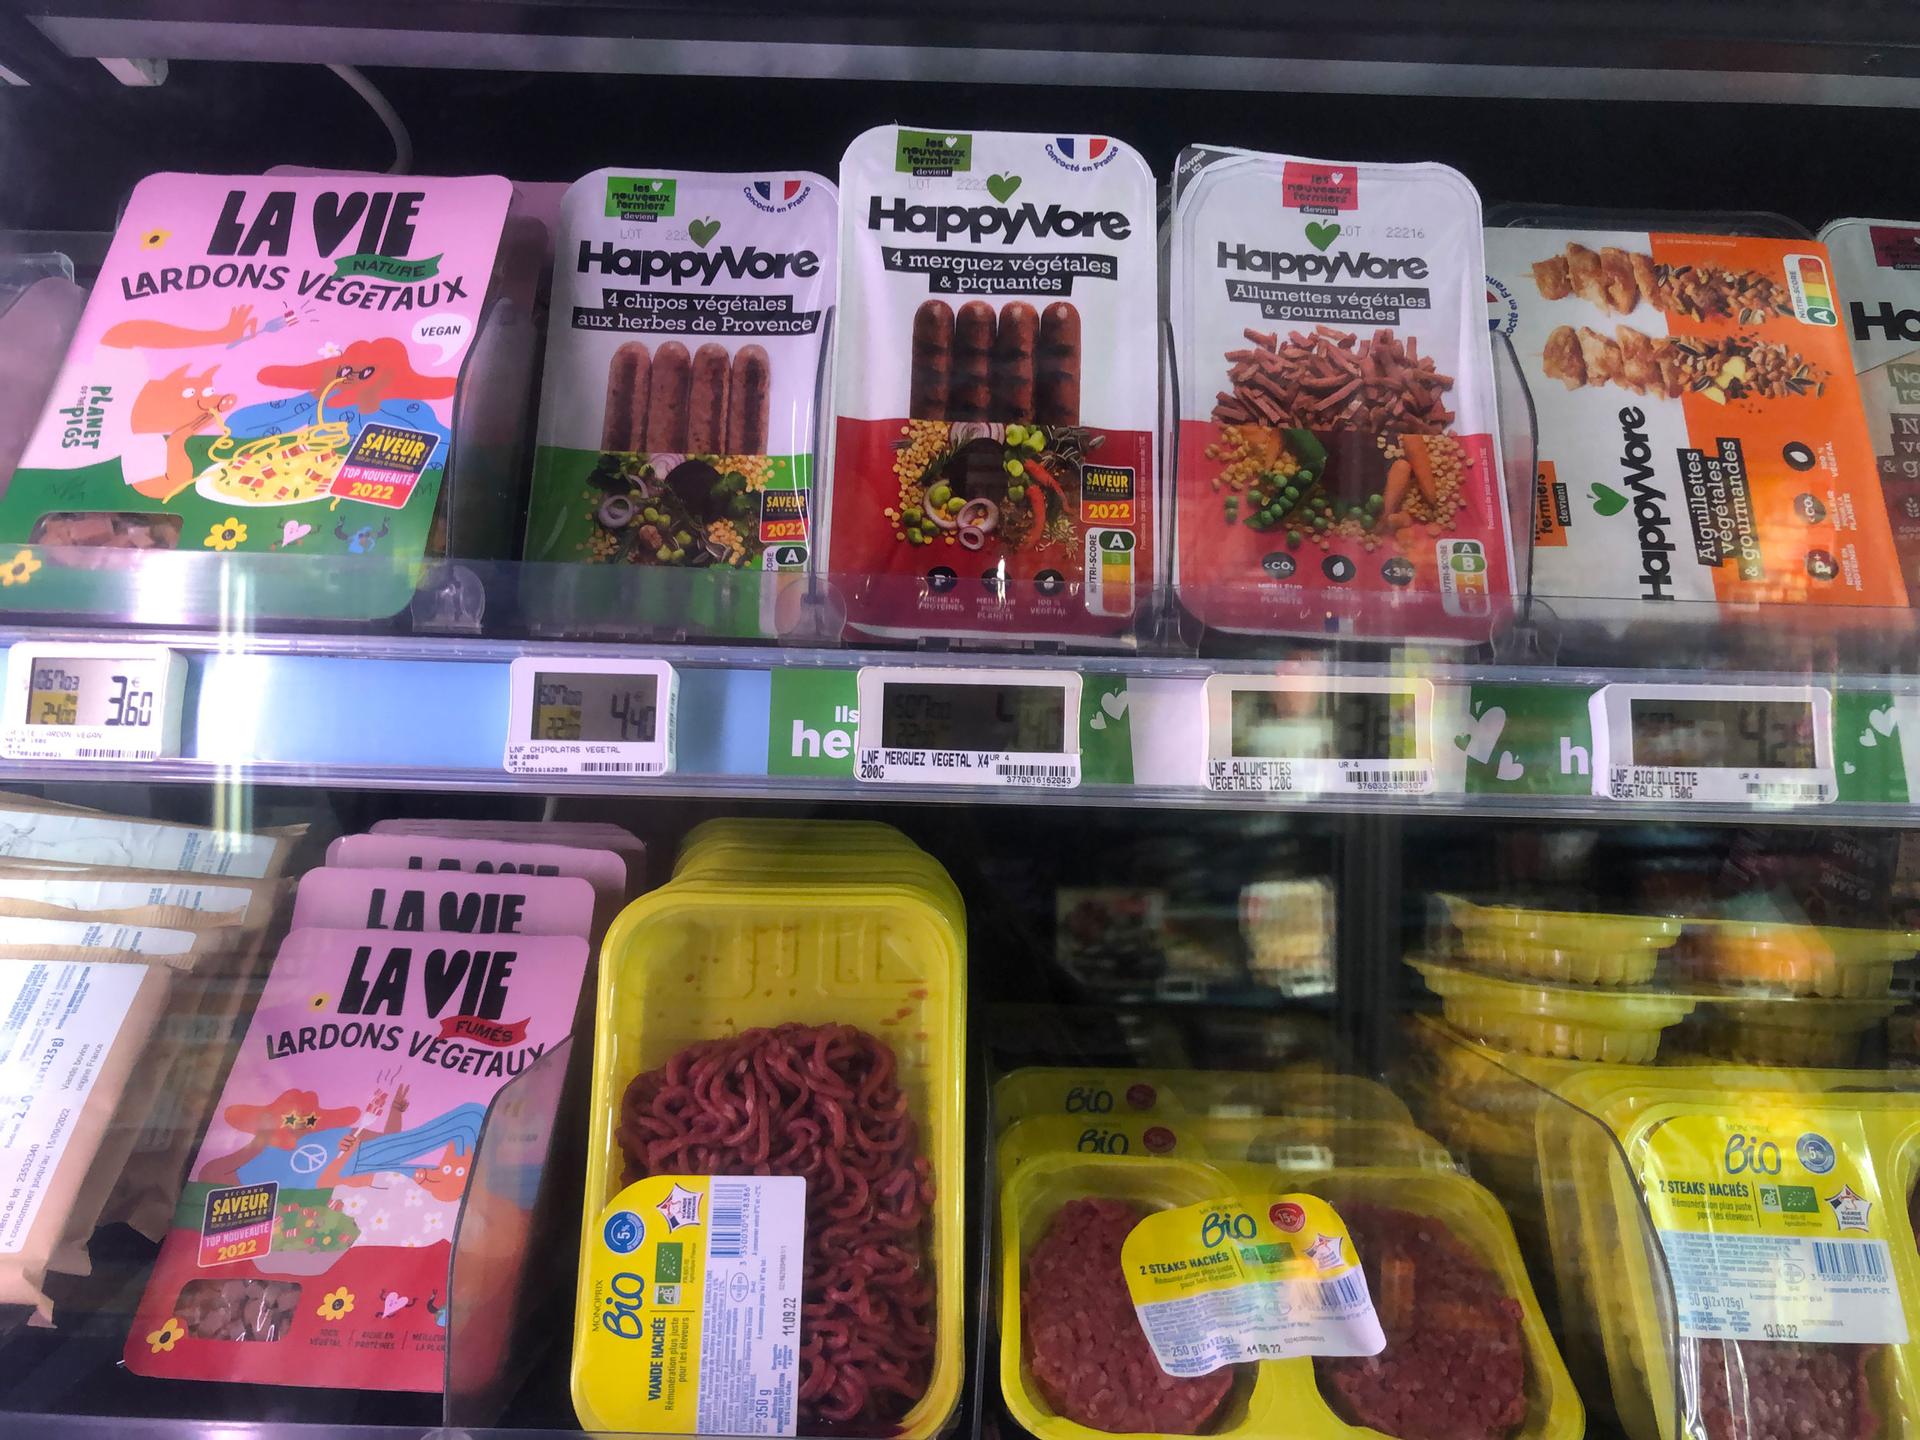 La Vie's plant-based bacon has upset the pork lobby in France.